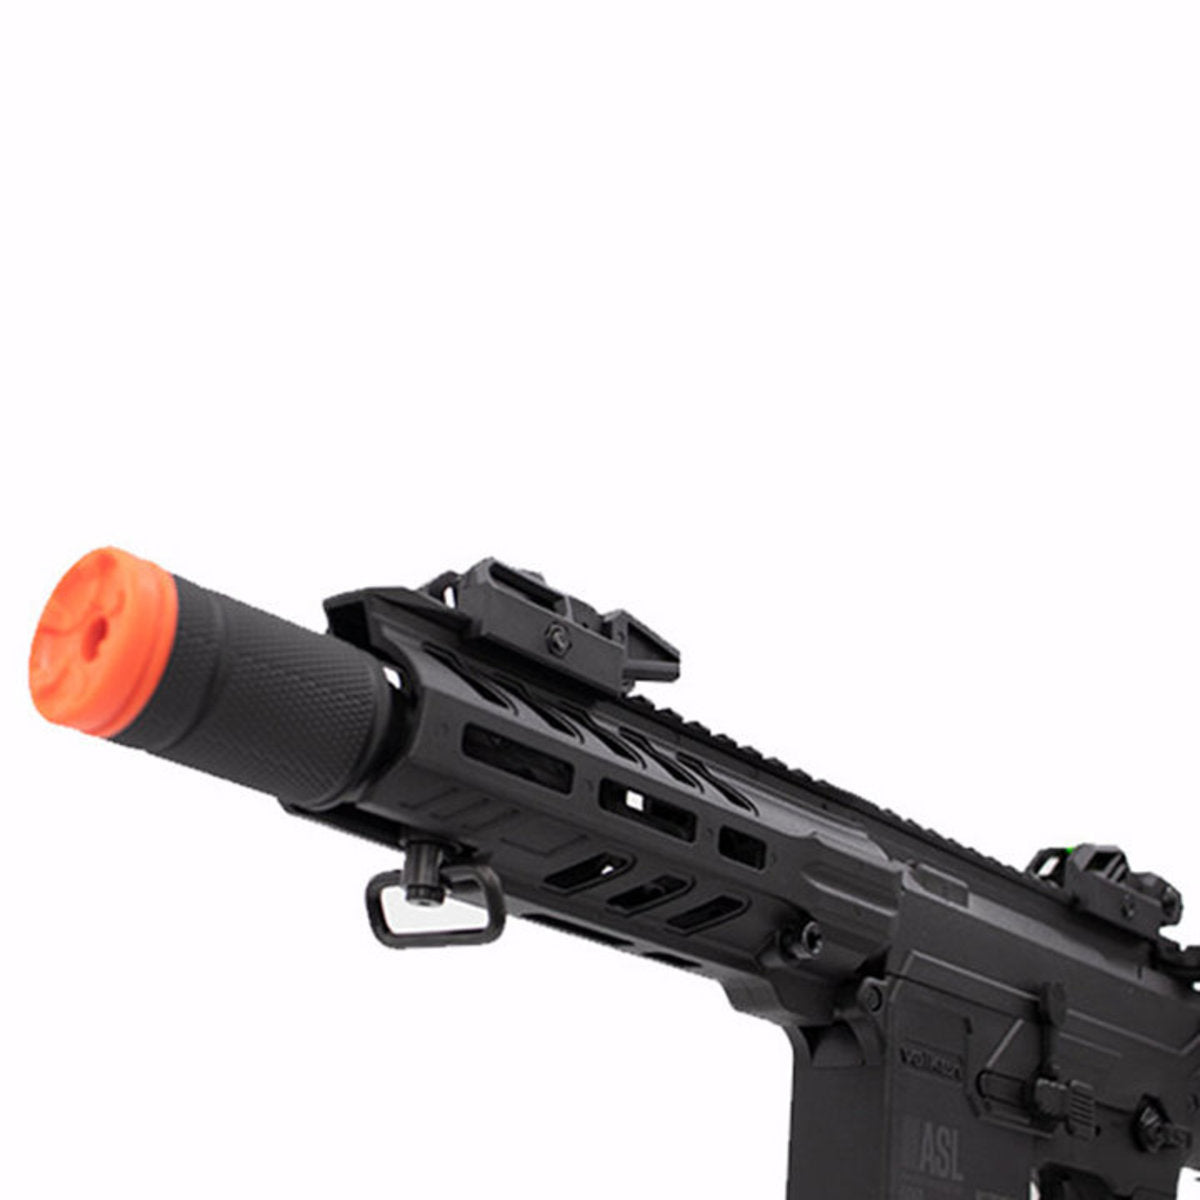 Valken ASL+ Series AEG FOXTROT45 Airsoft Rifle - Black